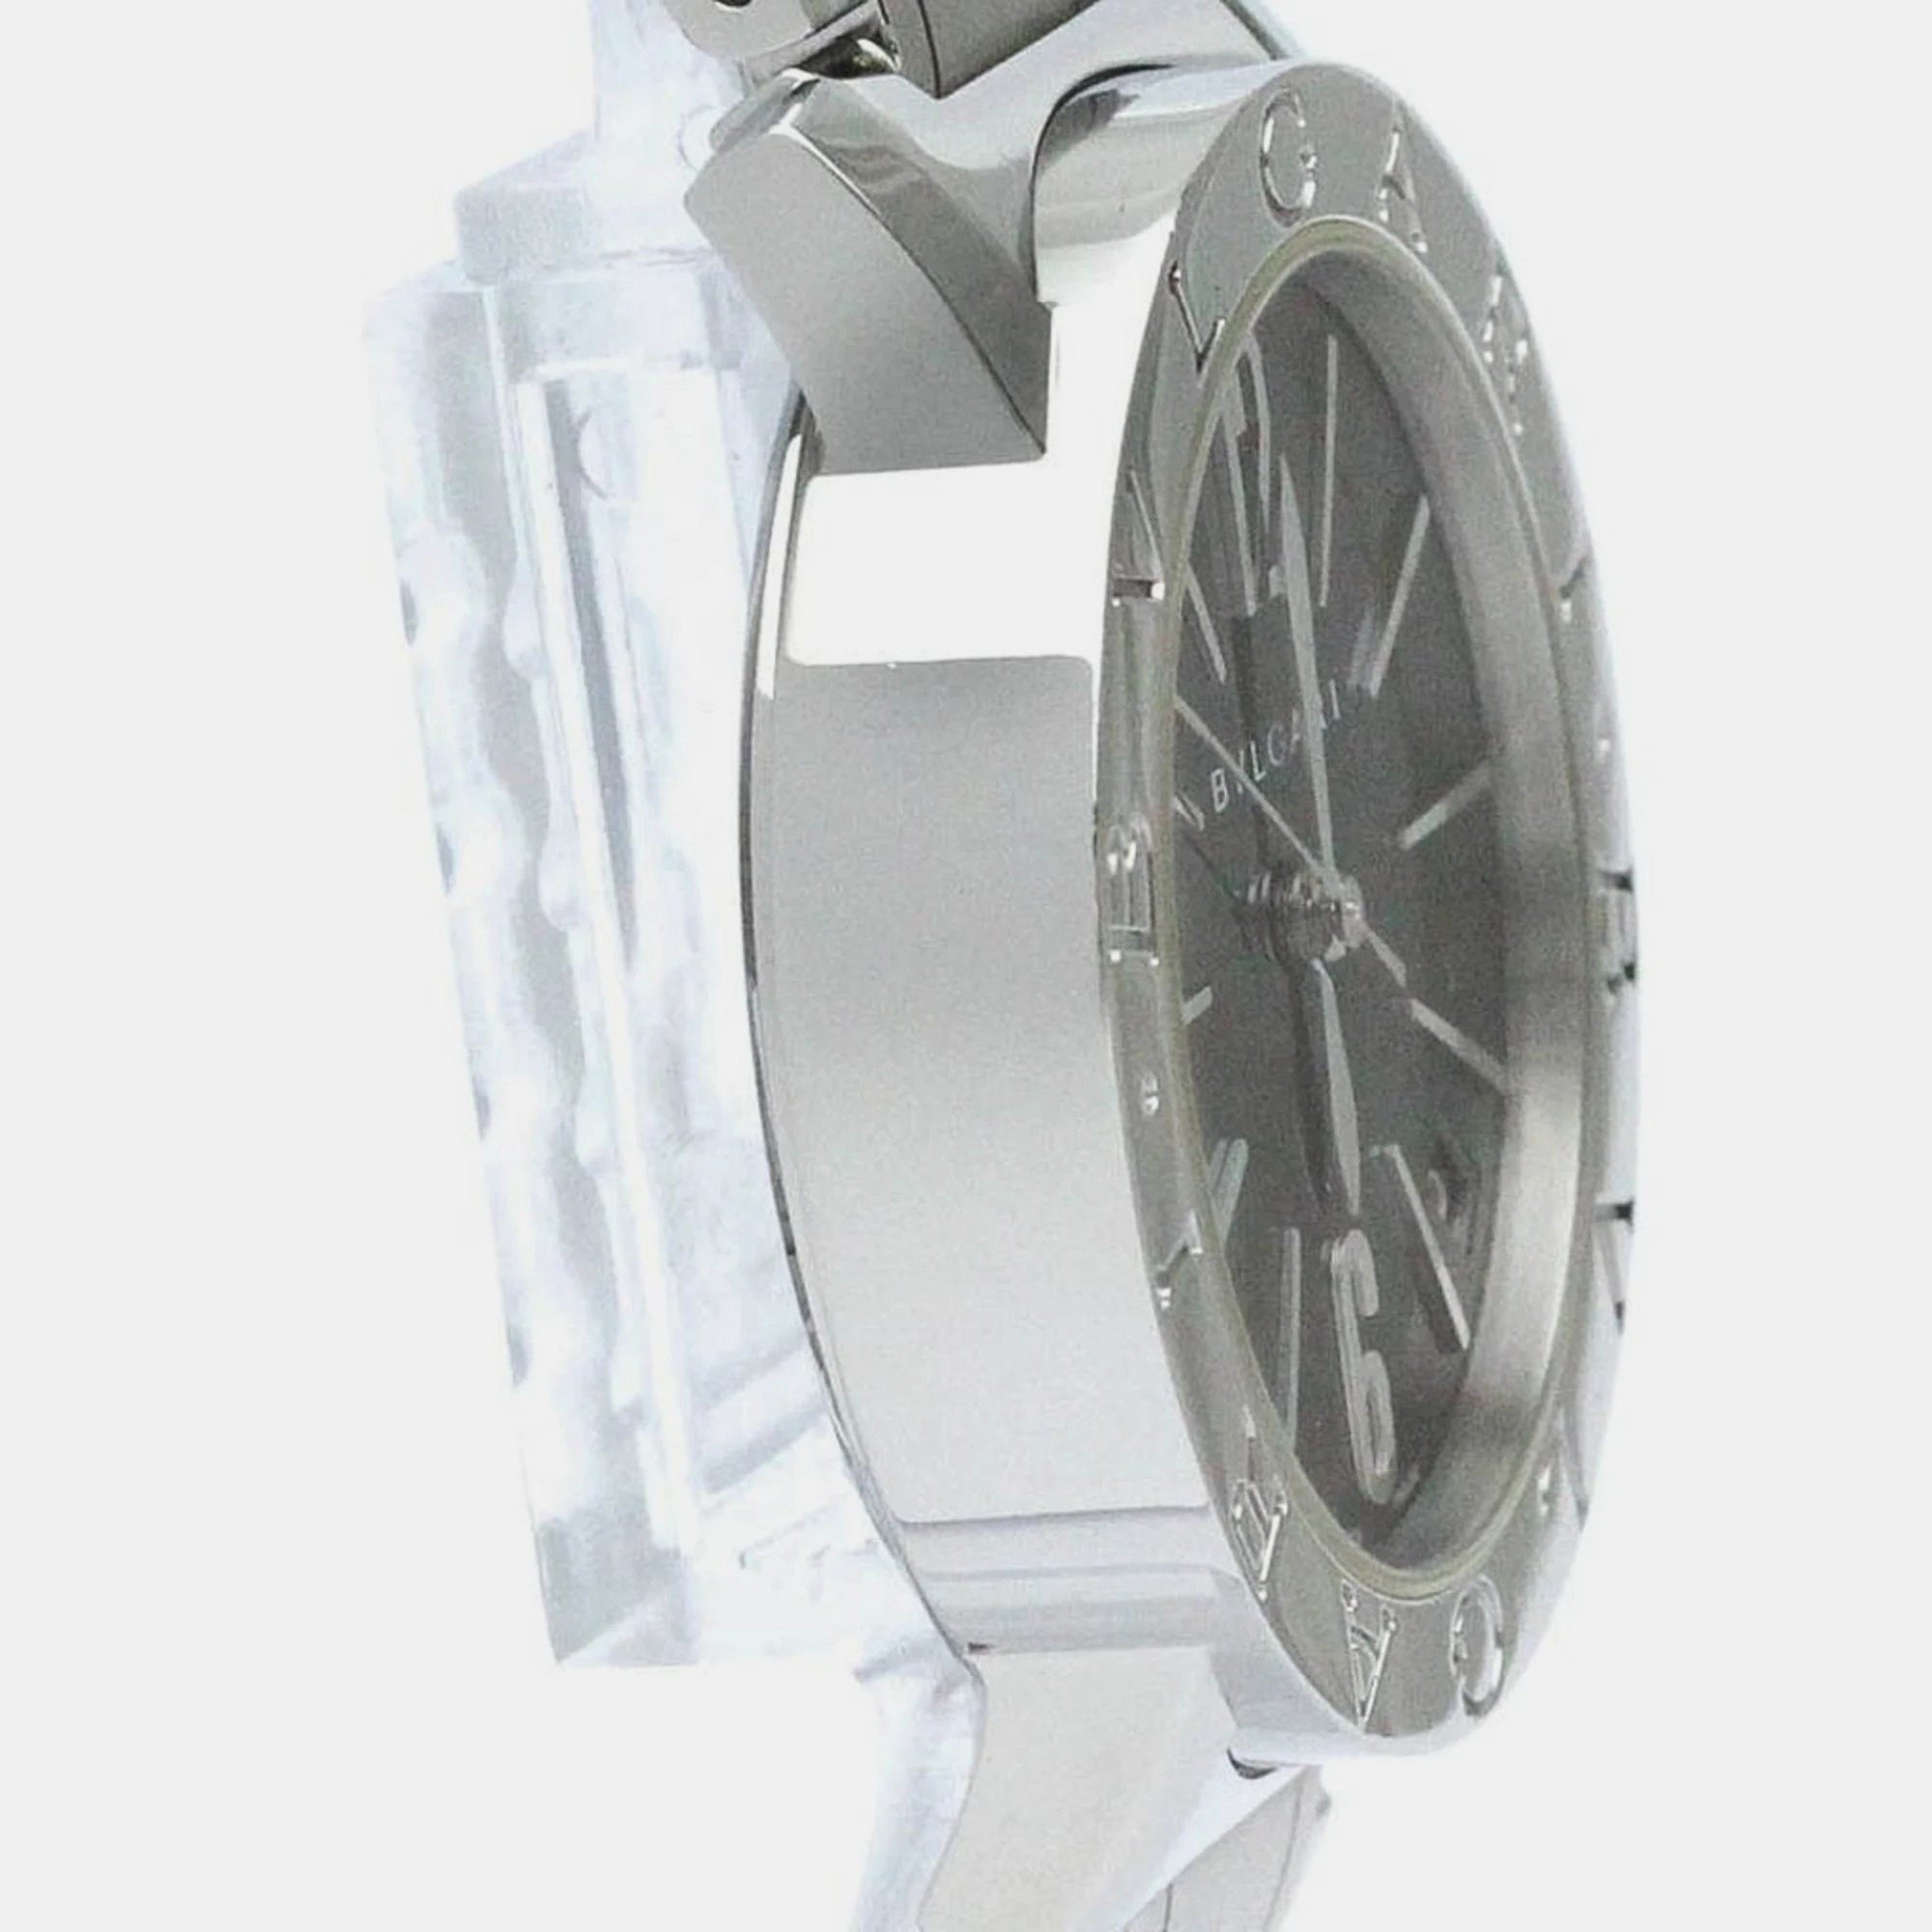 Bvlgari Black Stainless Steel Bvlgari Bvlgari BBL33S Automatic Men's Wristwatch 33 Mm